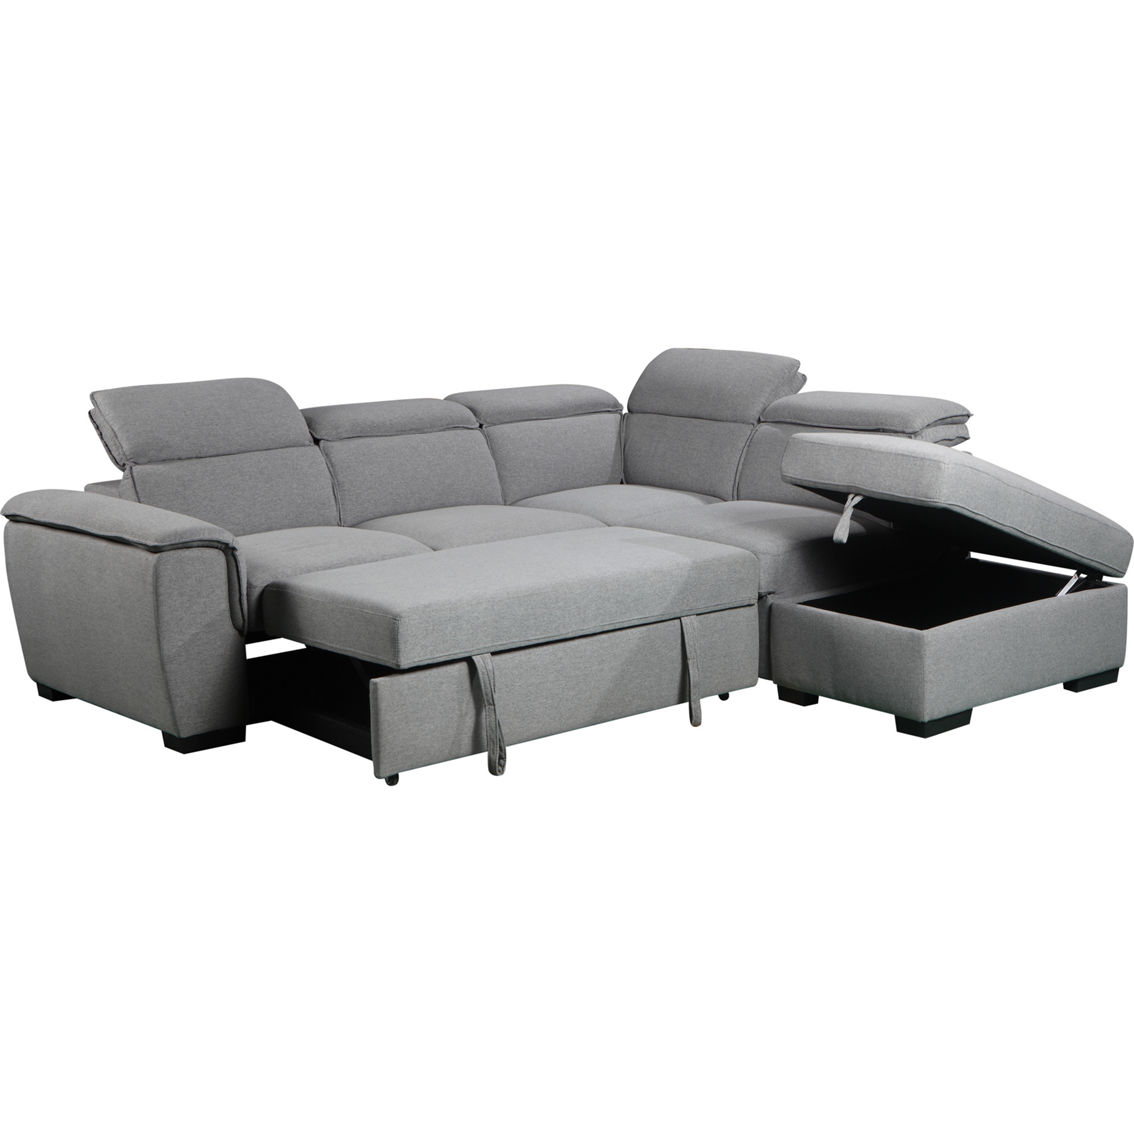 Primo International Joss Corner Sofa Bed with Storage - Image 2 of 5